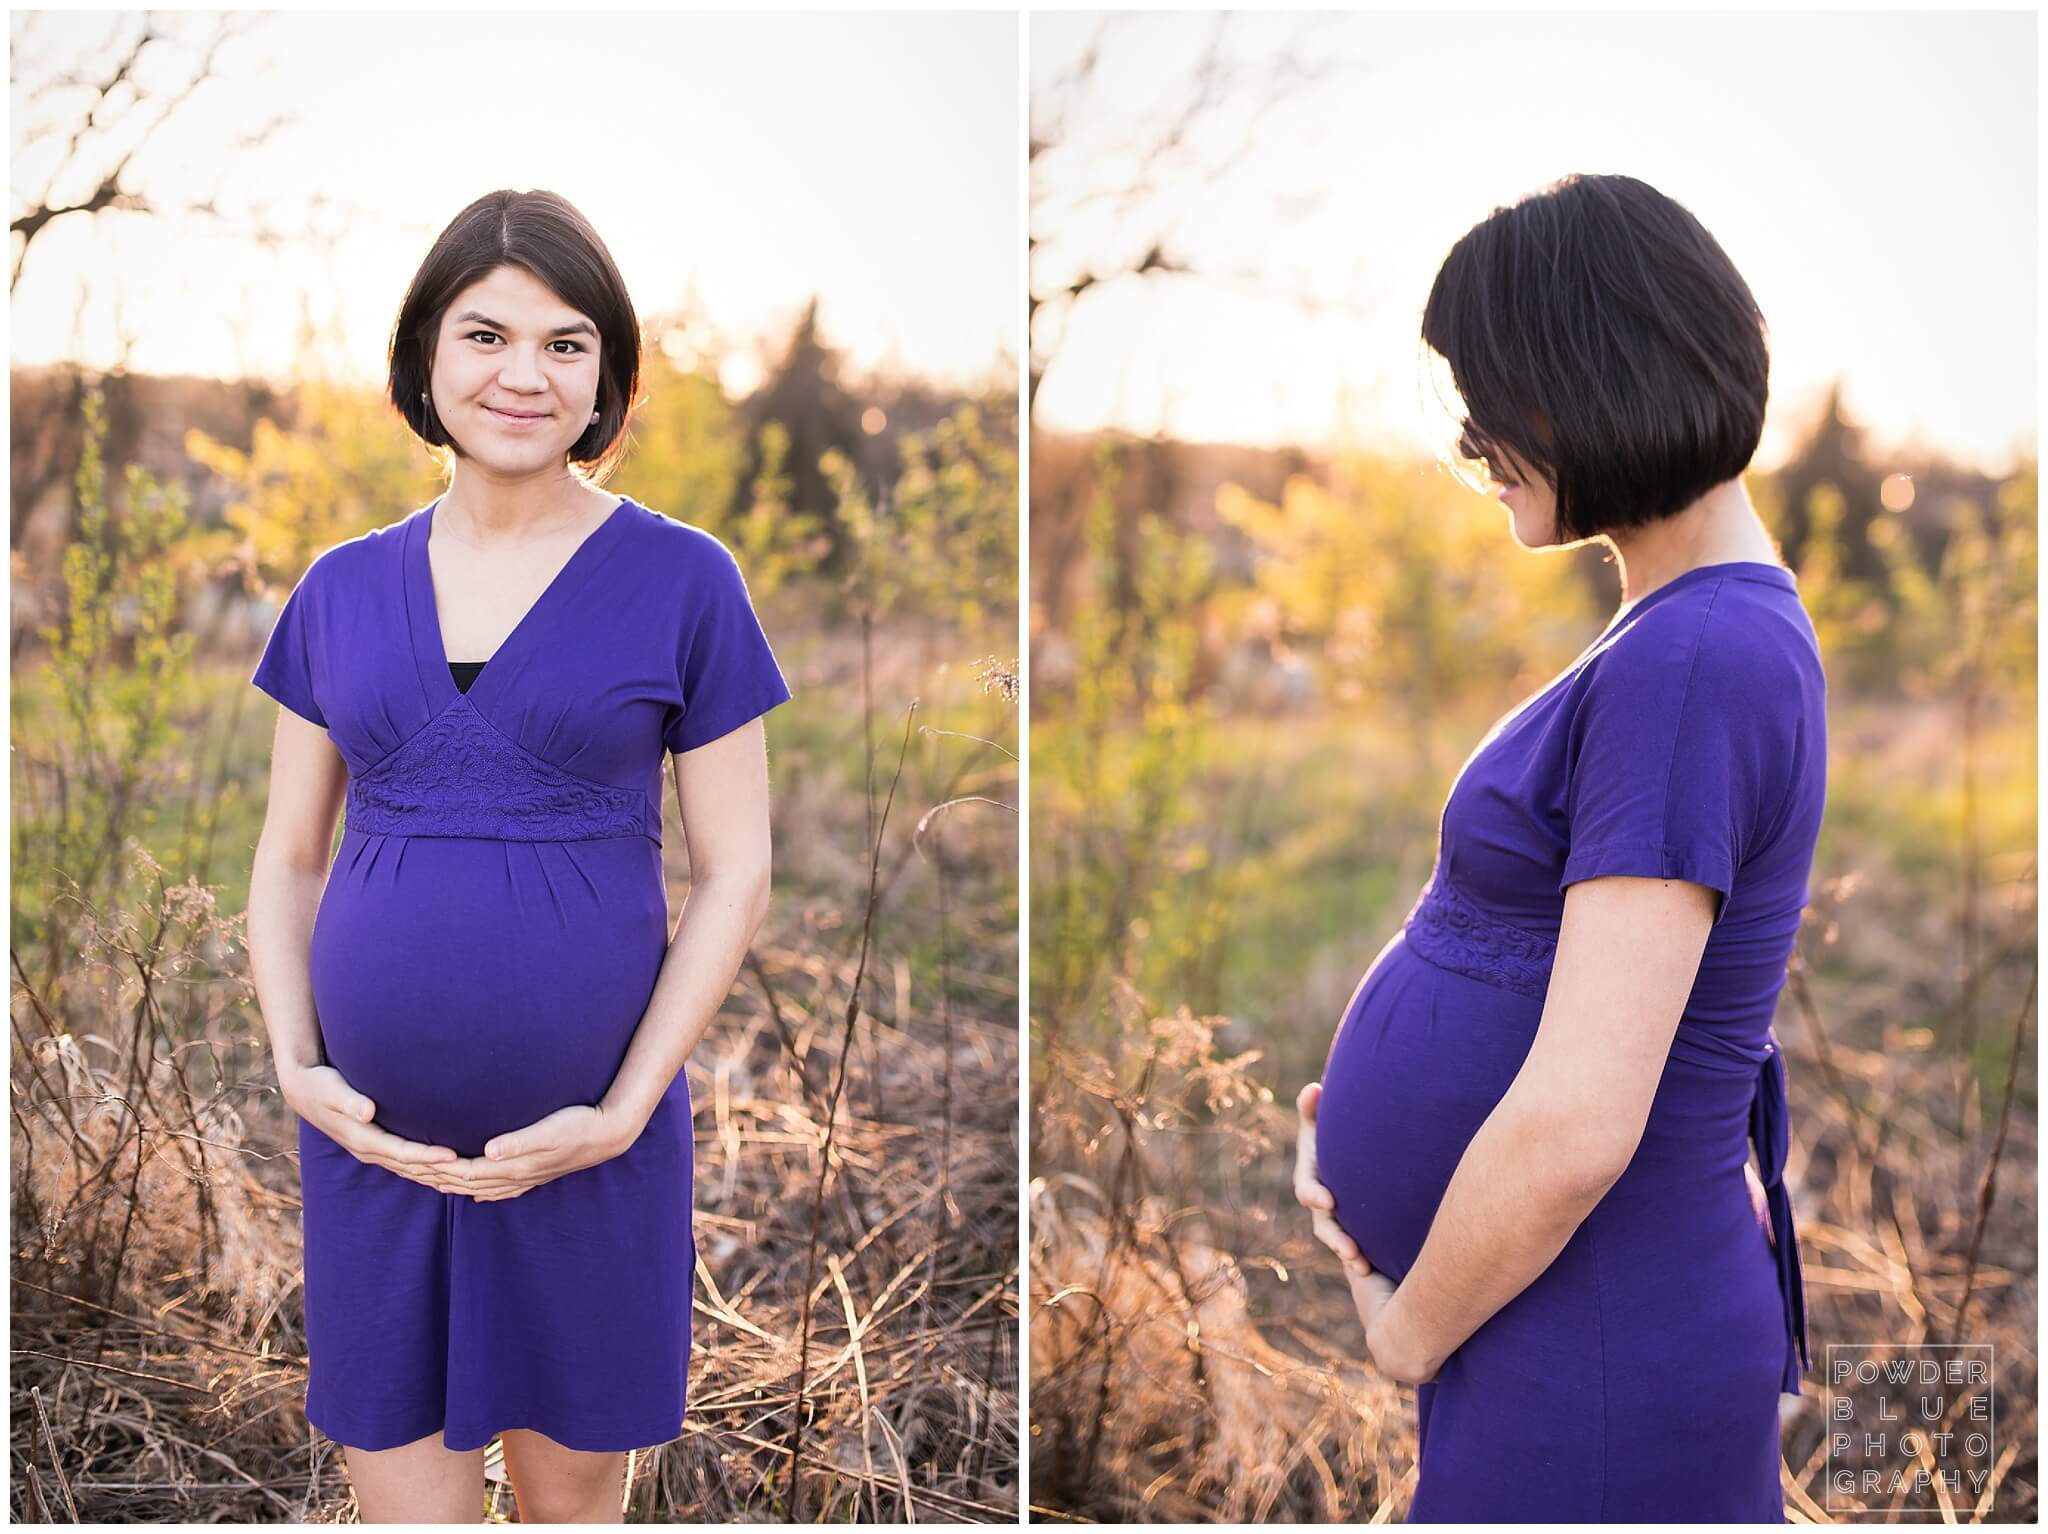 9 months pregnant maternity portrait purple dress standing in a field.